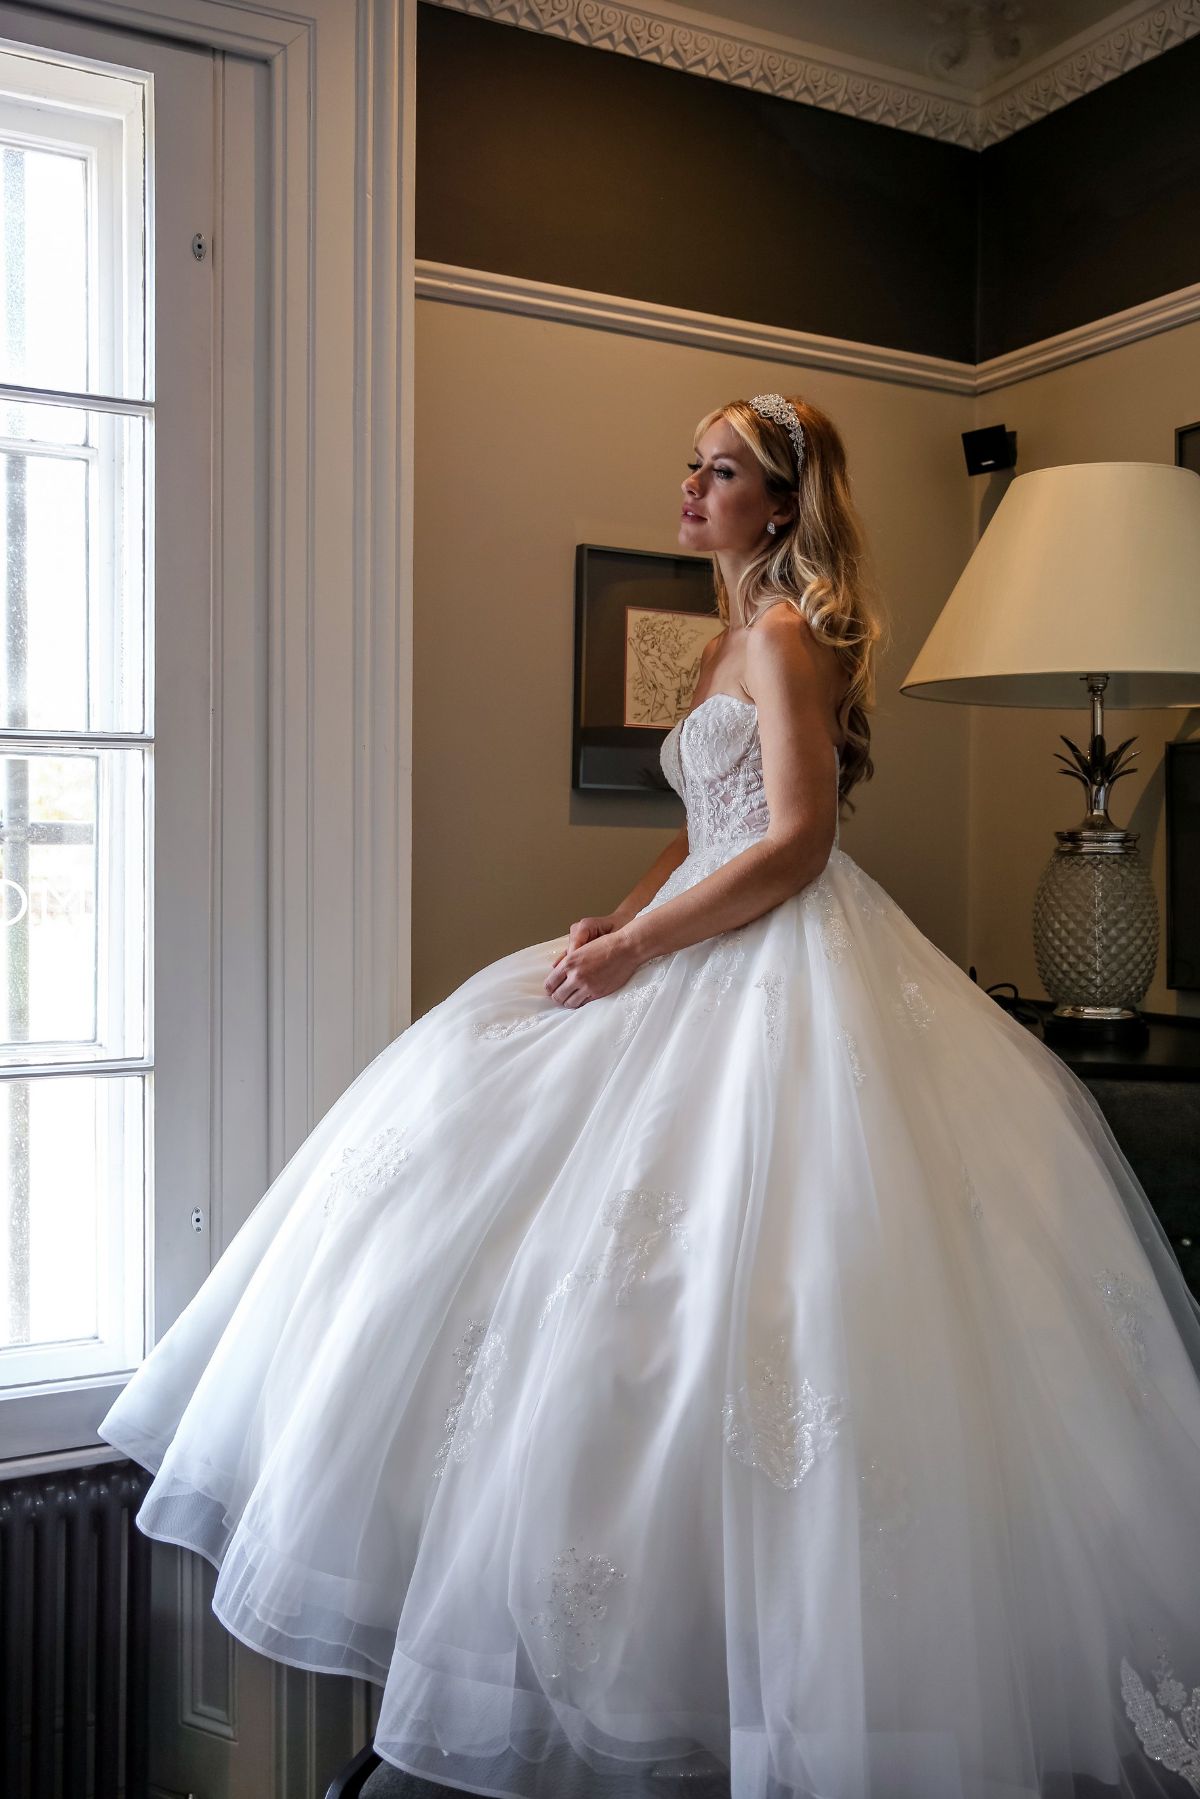 Best Dress 2 Impress Bridal-Image-77